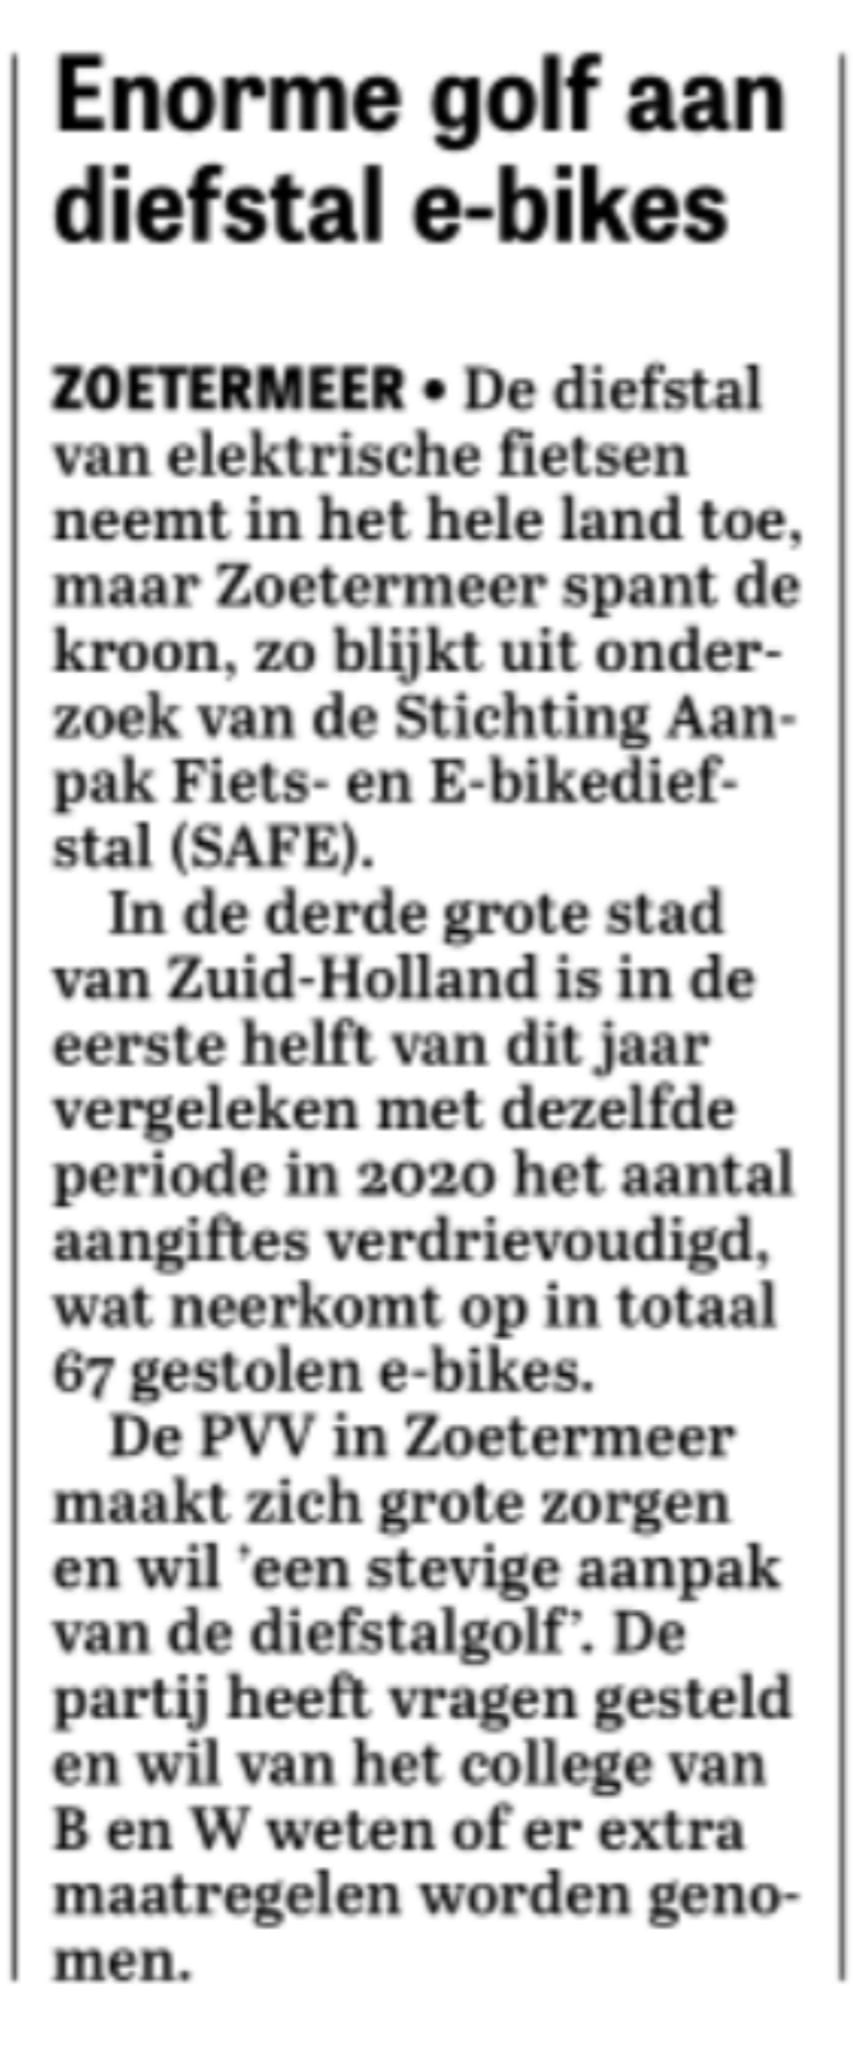 PVV_Zoetermeer_Vragen_Diefstal_E-bikes.jpg